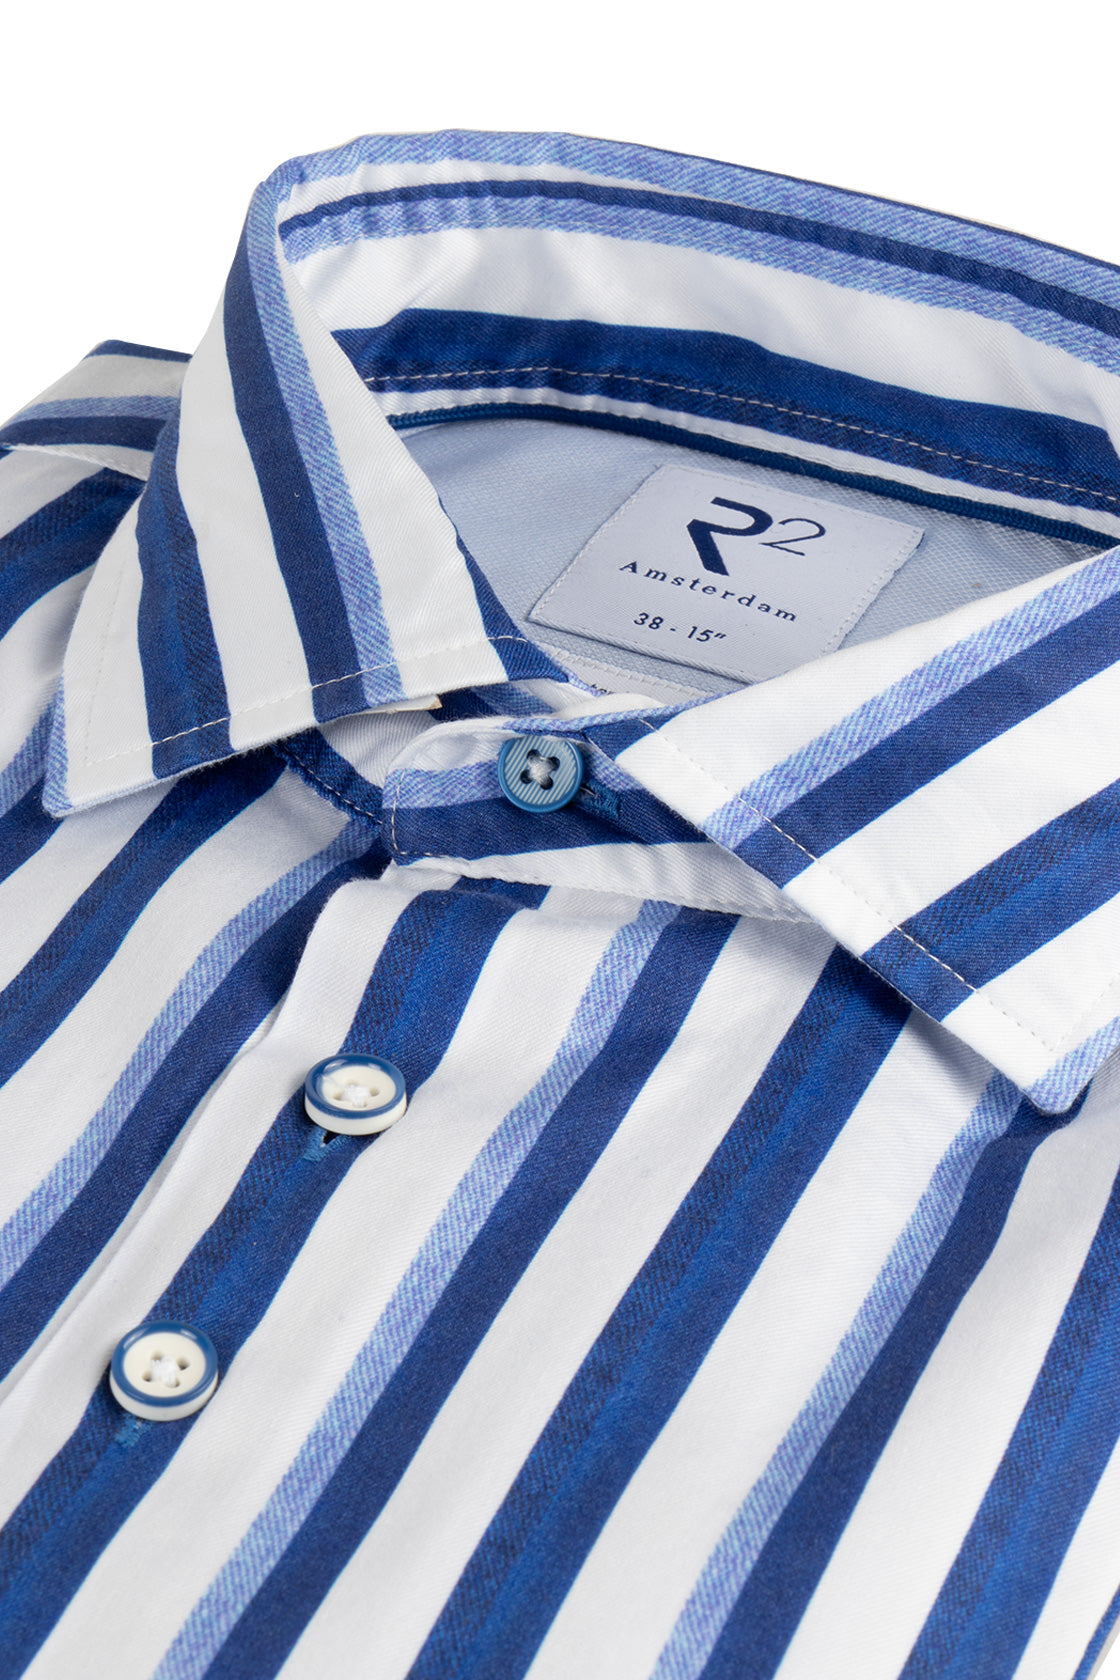 R2 Amsterdam Stripe Shirt White/Blue